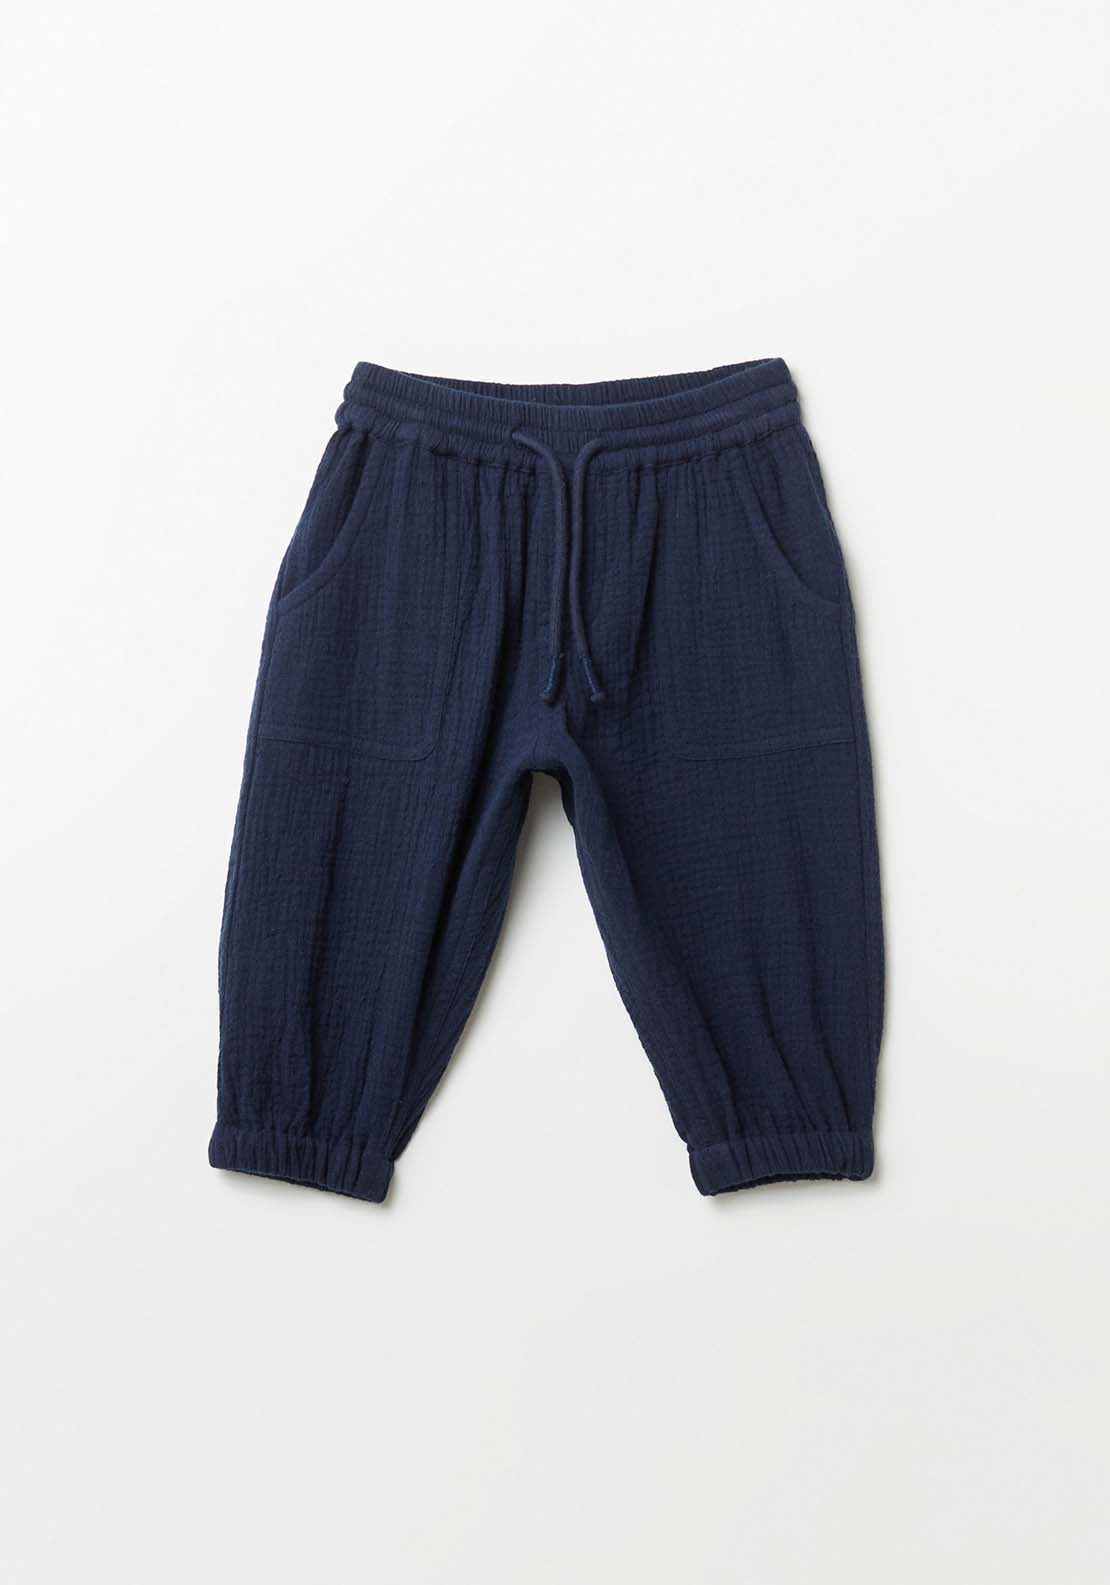 Sfera Cuffed Denim Pants - Navy / Blue 2 Shaws Department Stores